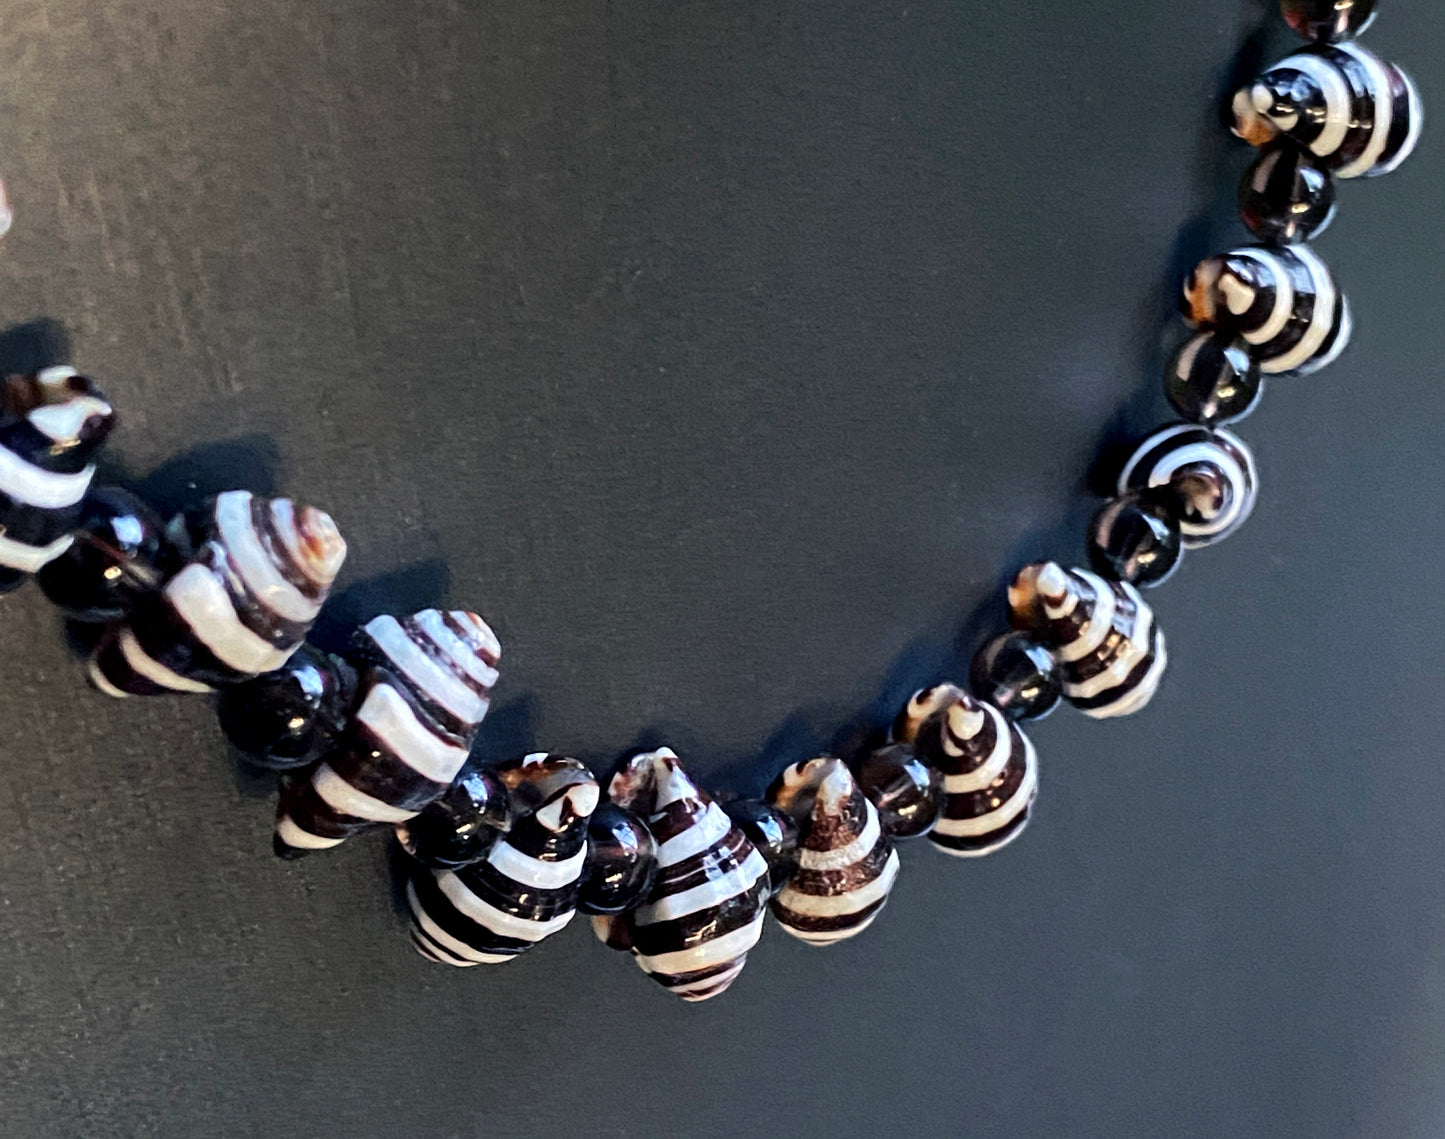 Shell, Smokey Topaz, Onyx Necklace with oxidized sterling silver